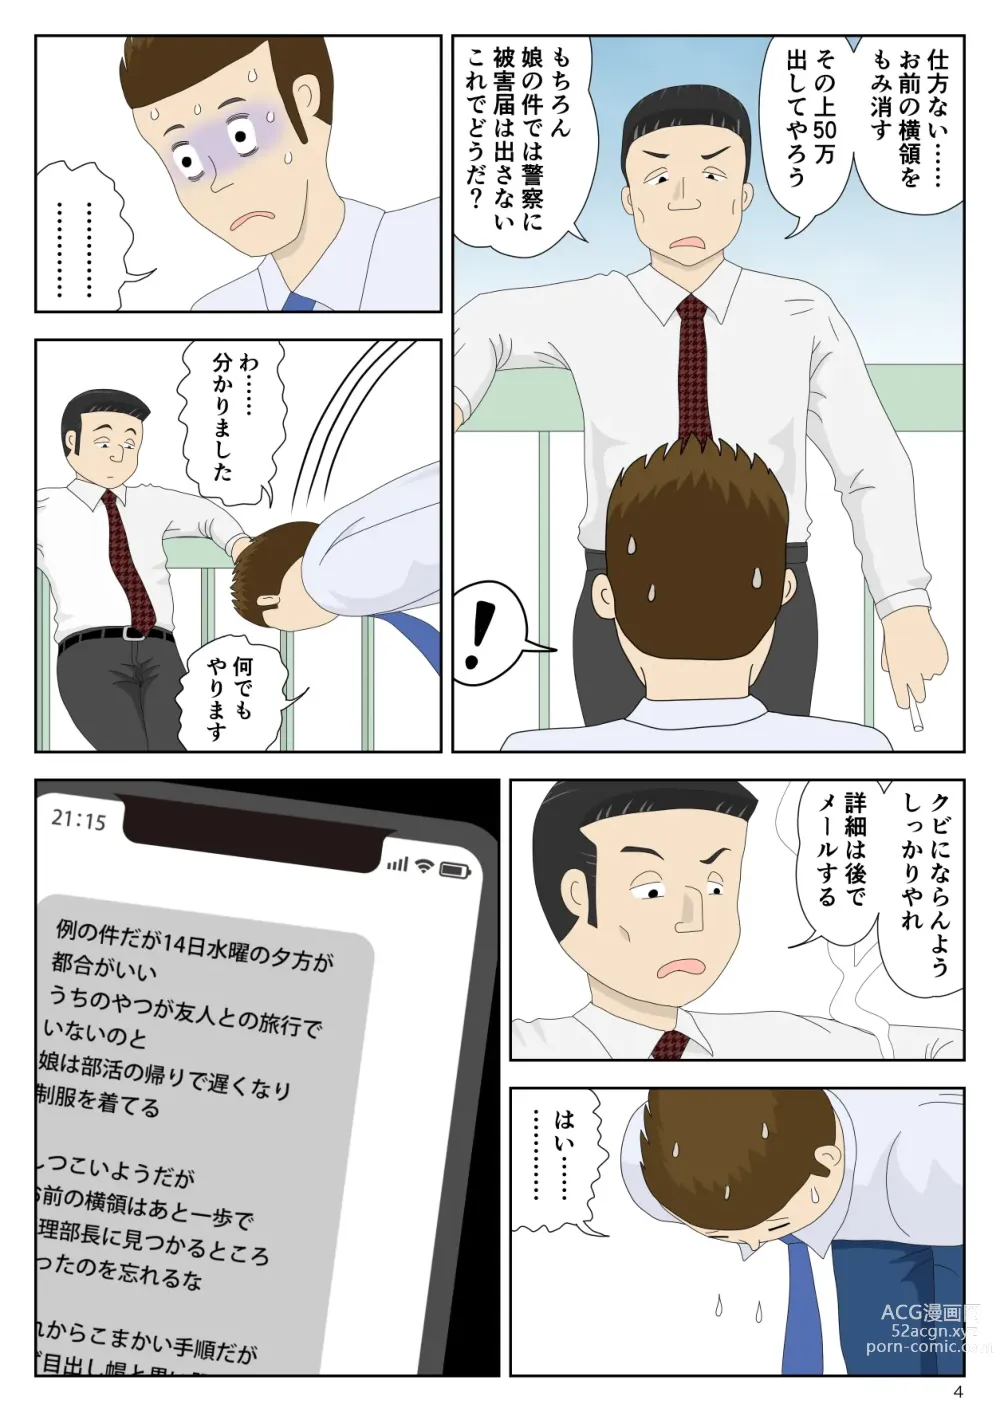 Page 4 of doujinshi Goutou no Yoru